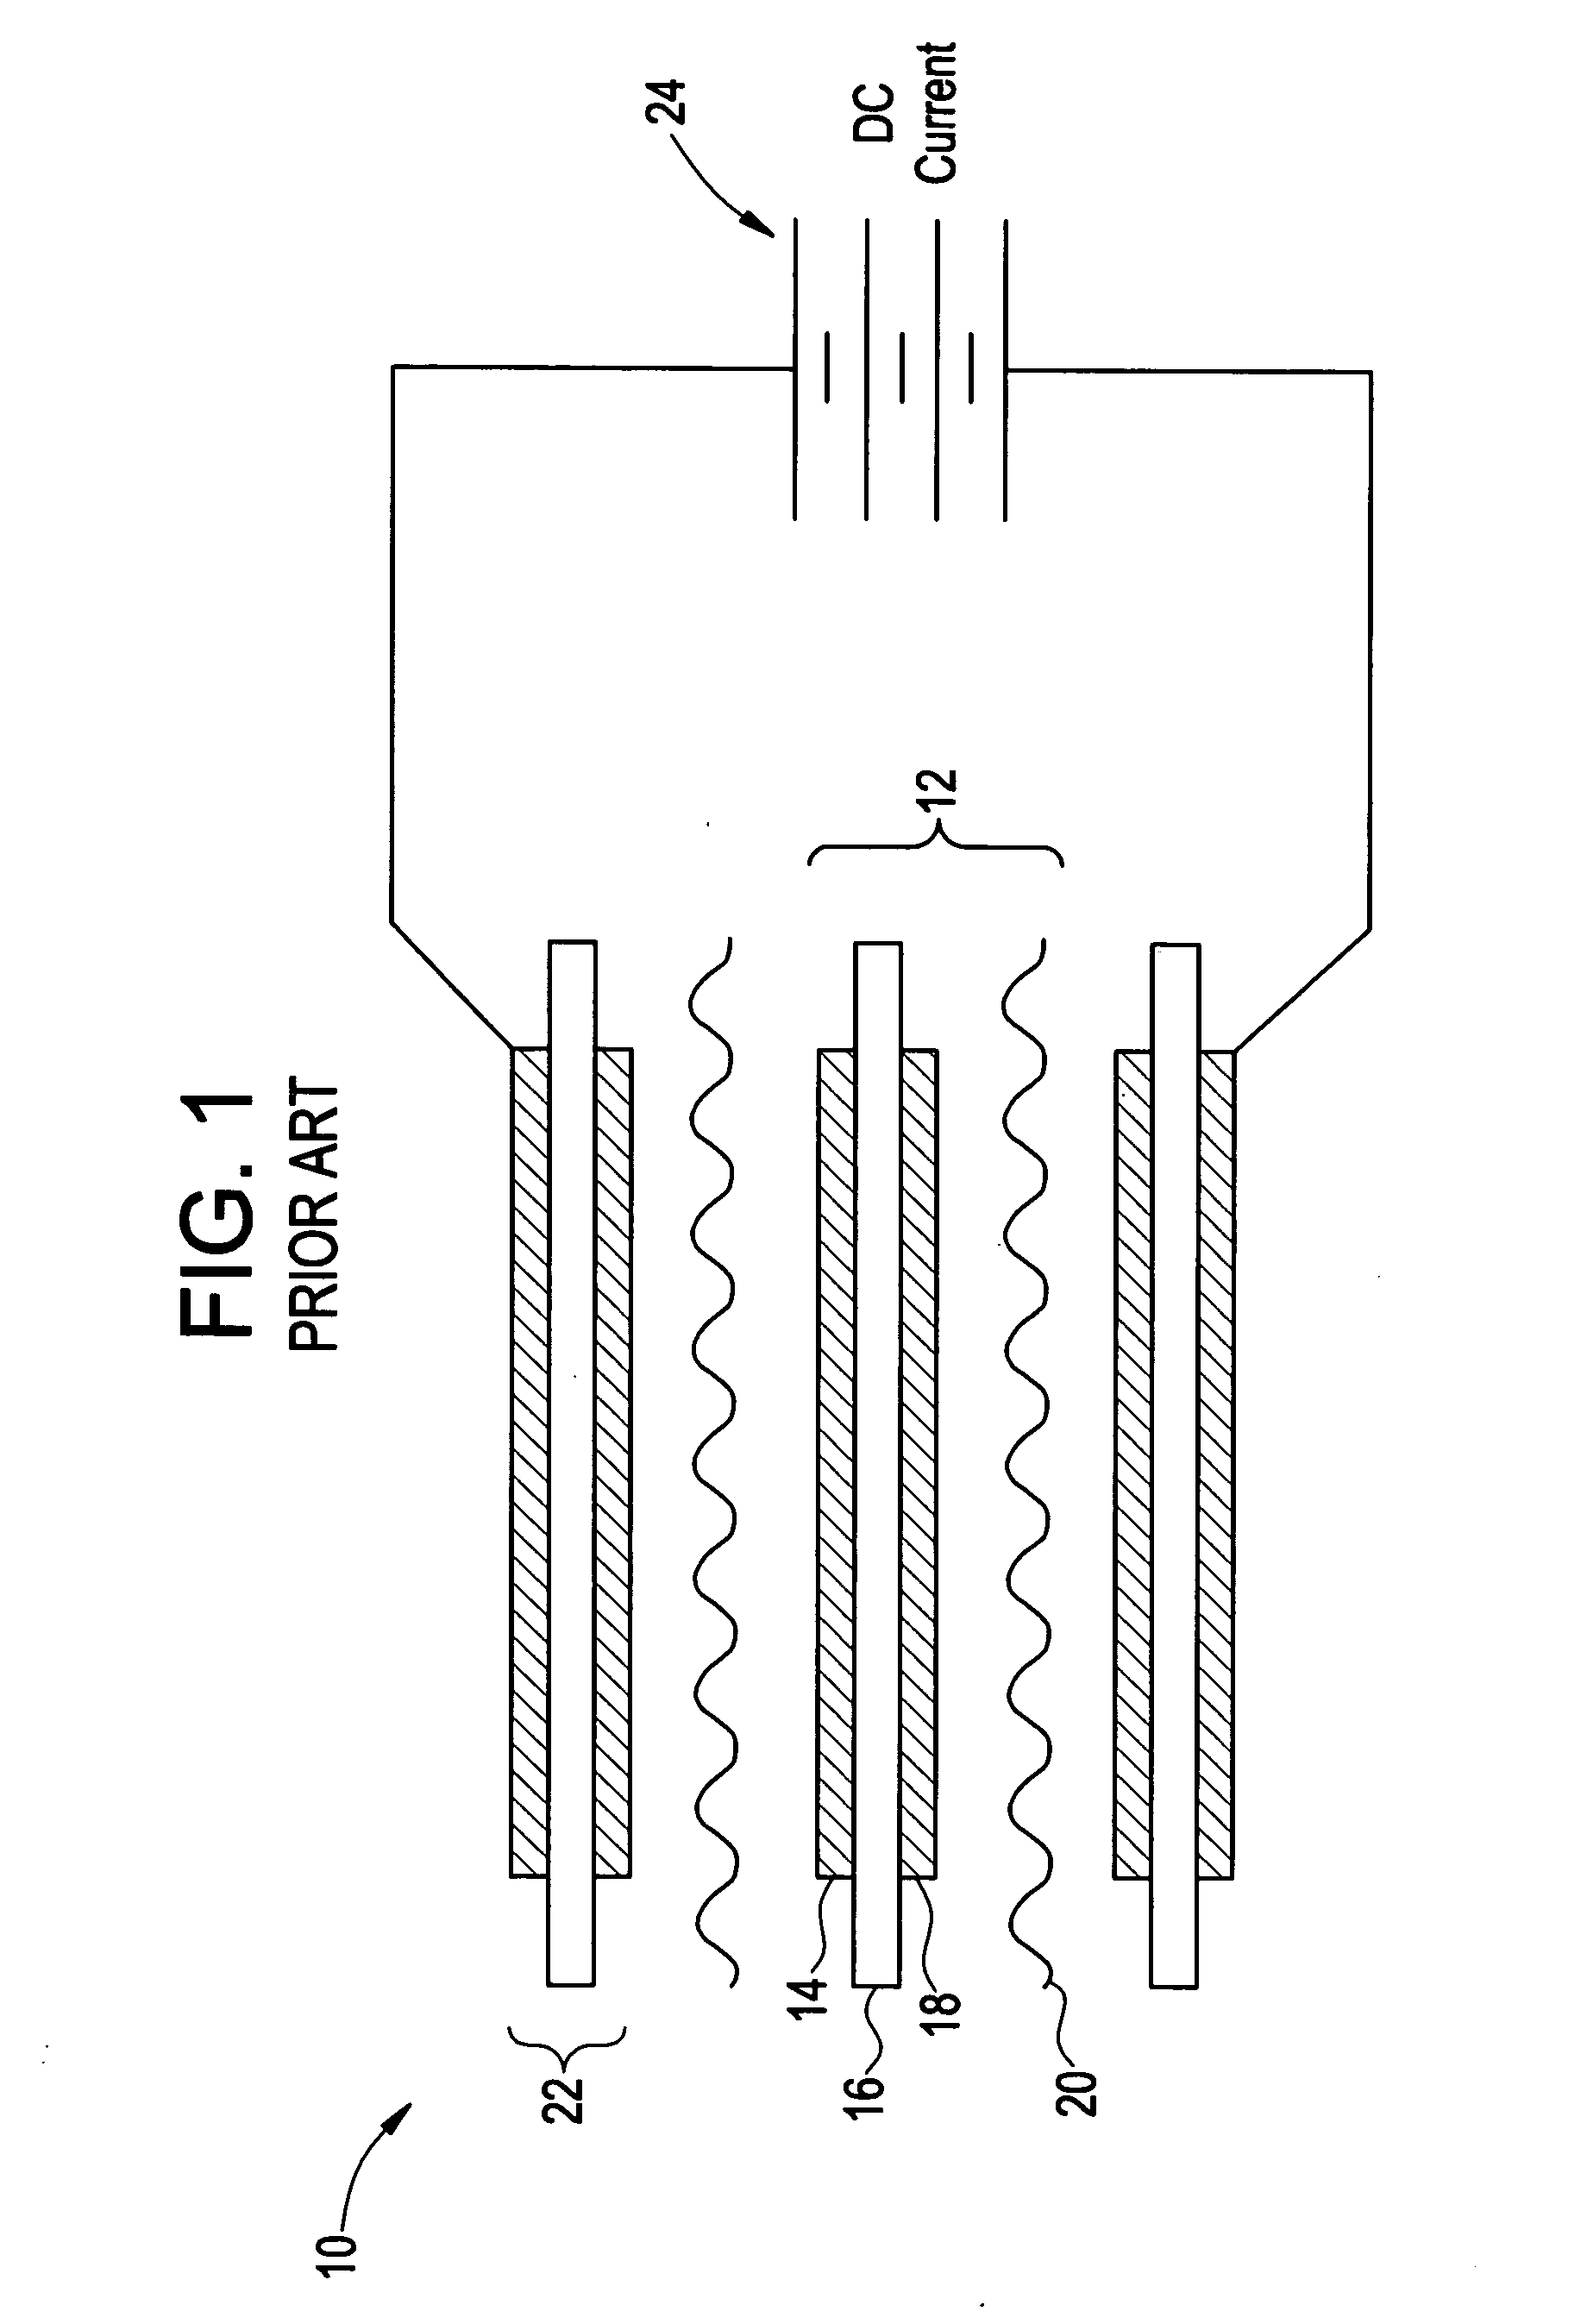 Pressurized electrolyzer stack module